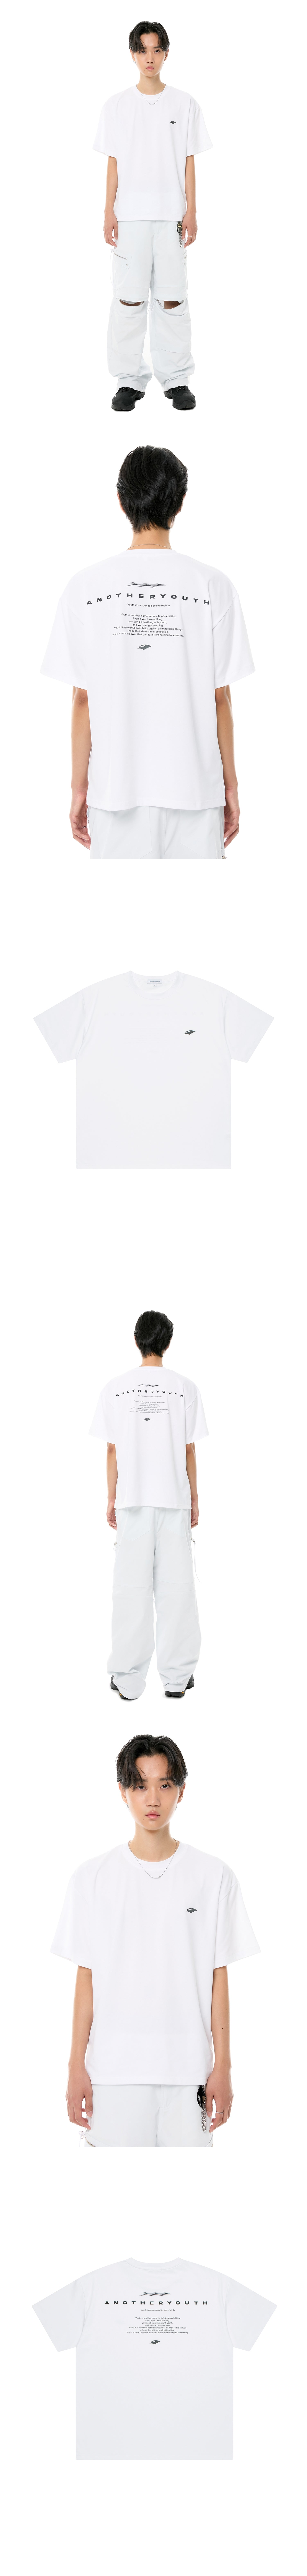 002-23 logo t-shirts - white